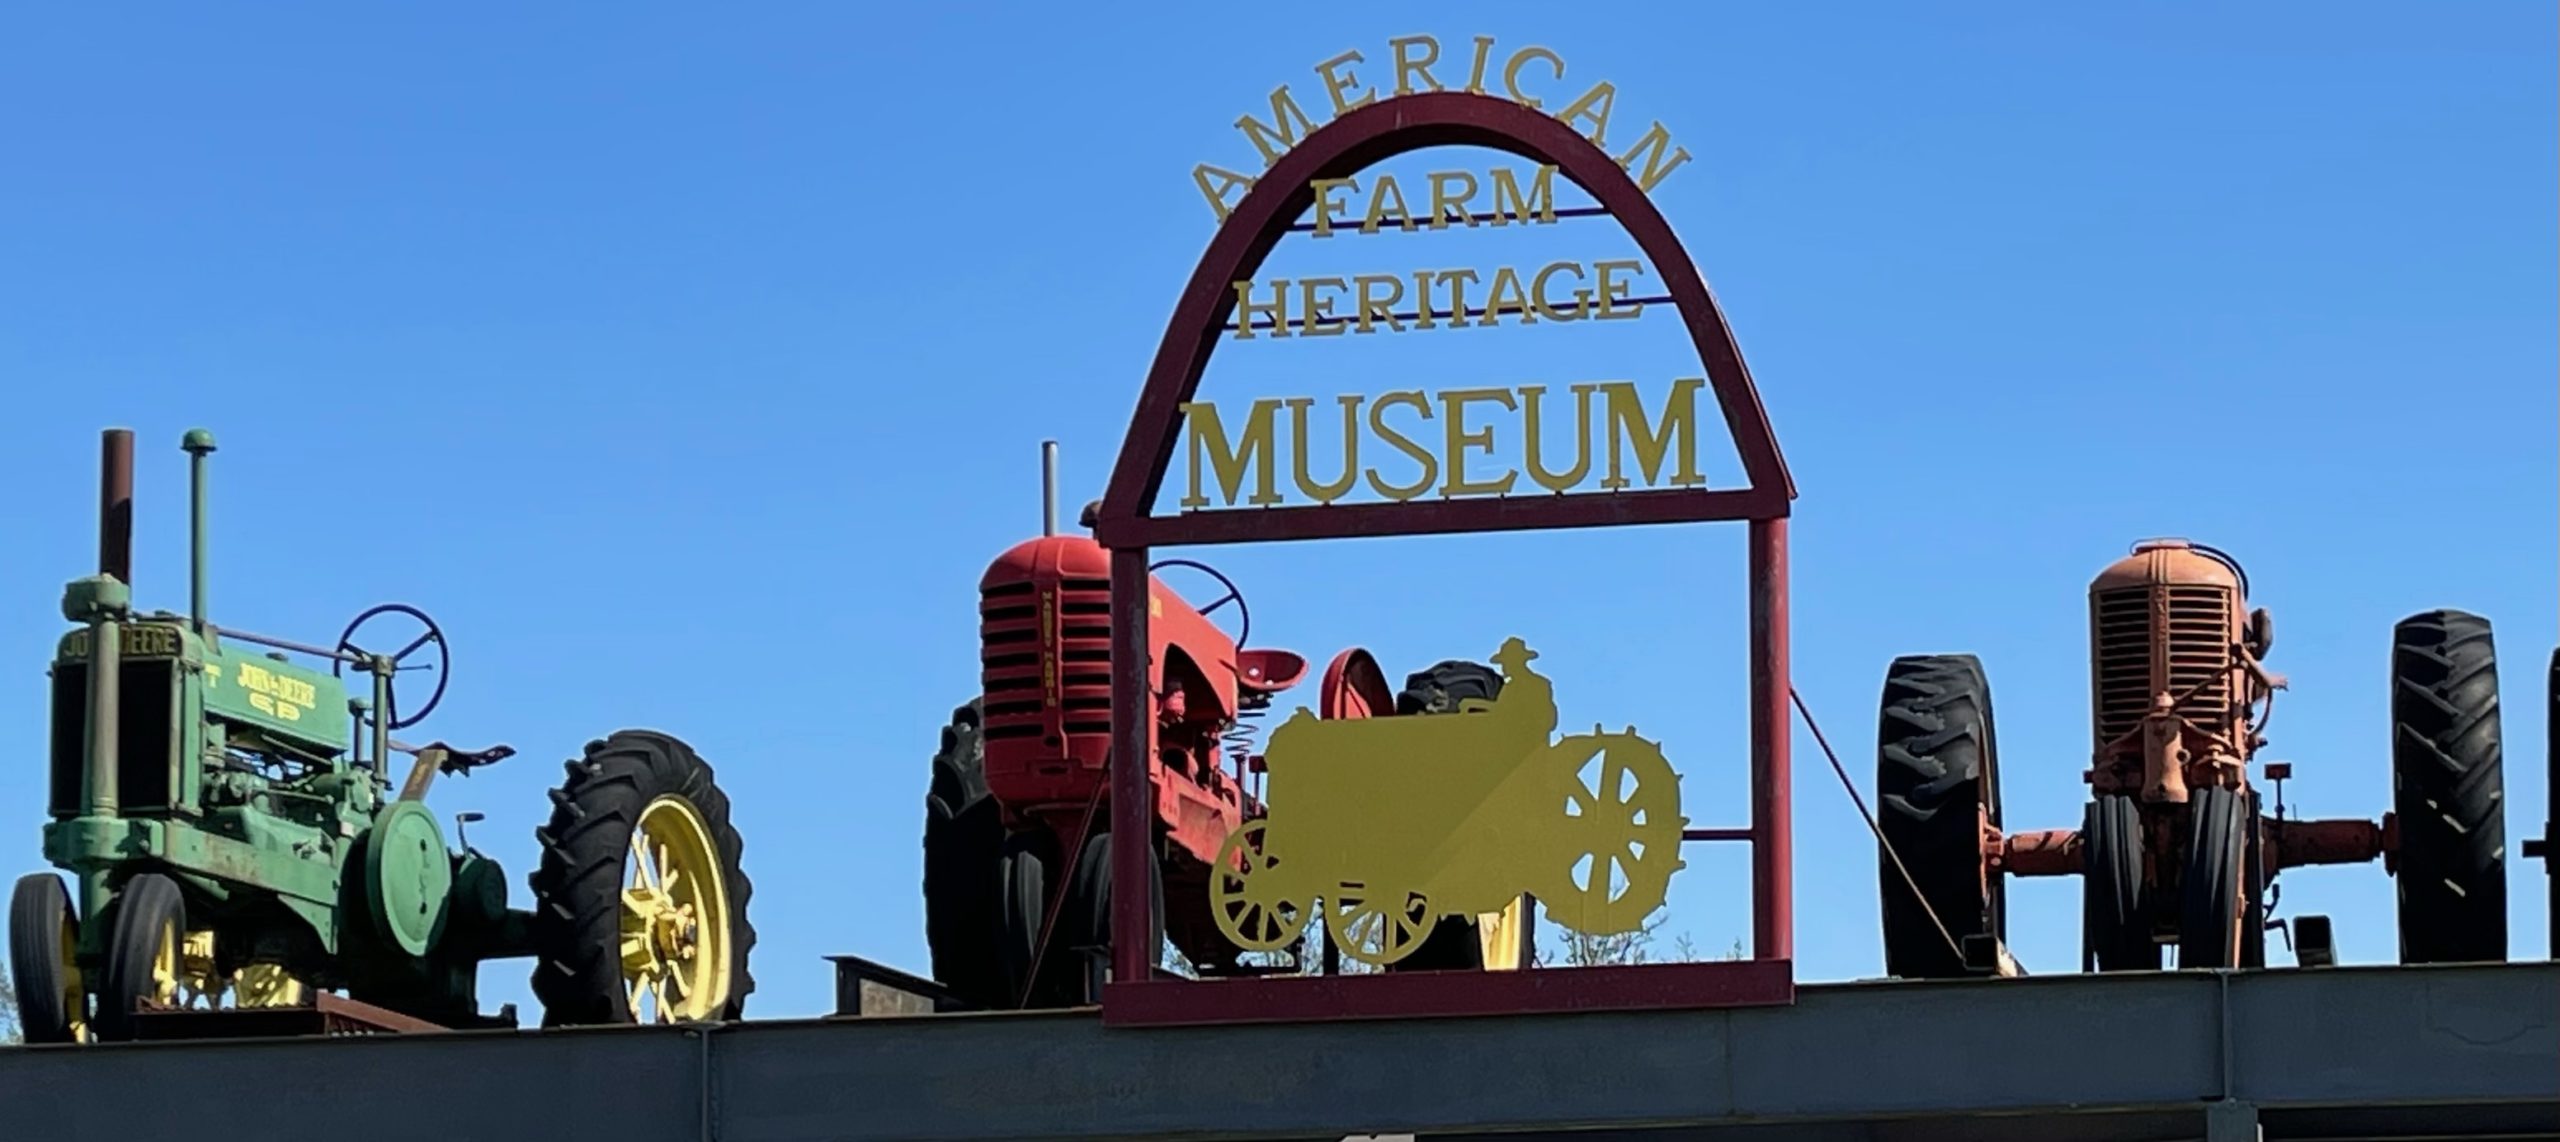 American Farm Heritage Museum (AFHM) – Greenville, IL